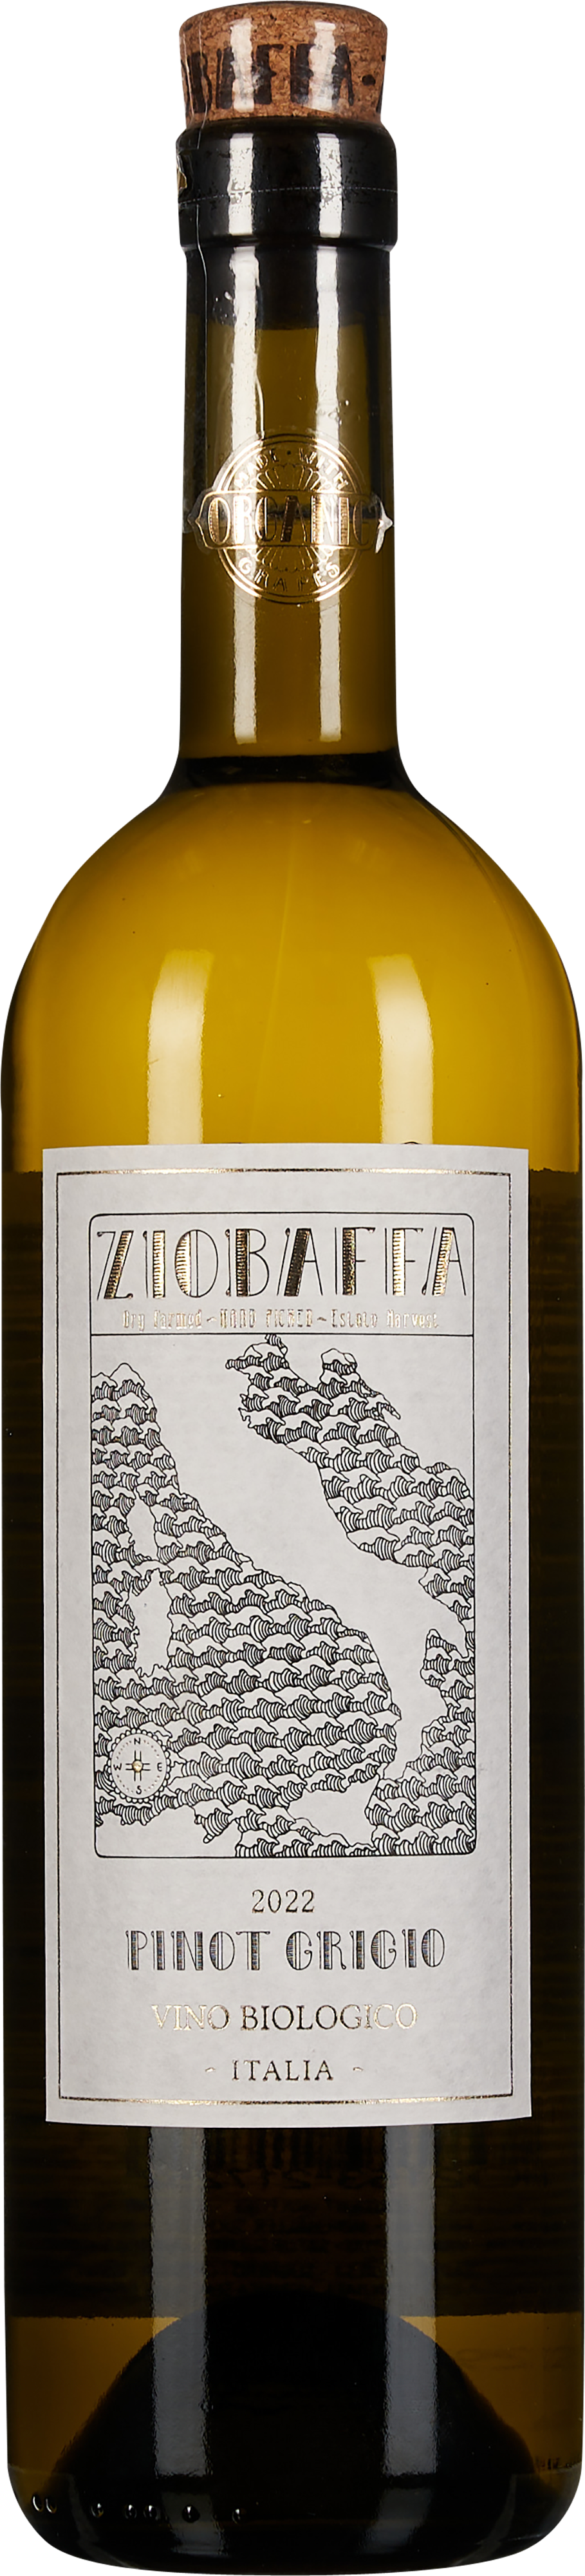 Ziobaffa Pinot Grigio Terre Siciliane 2022 - WEIN & CO